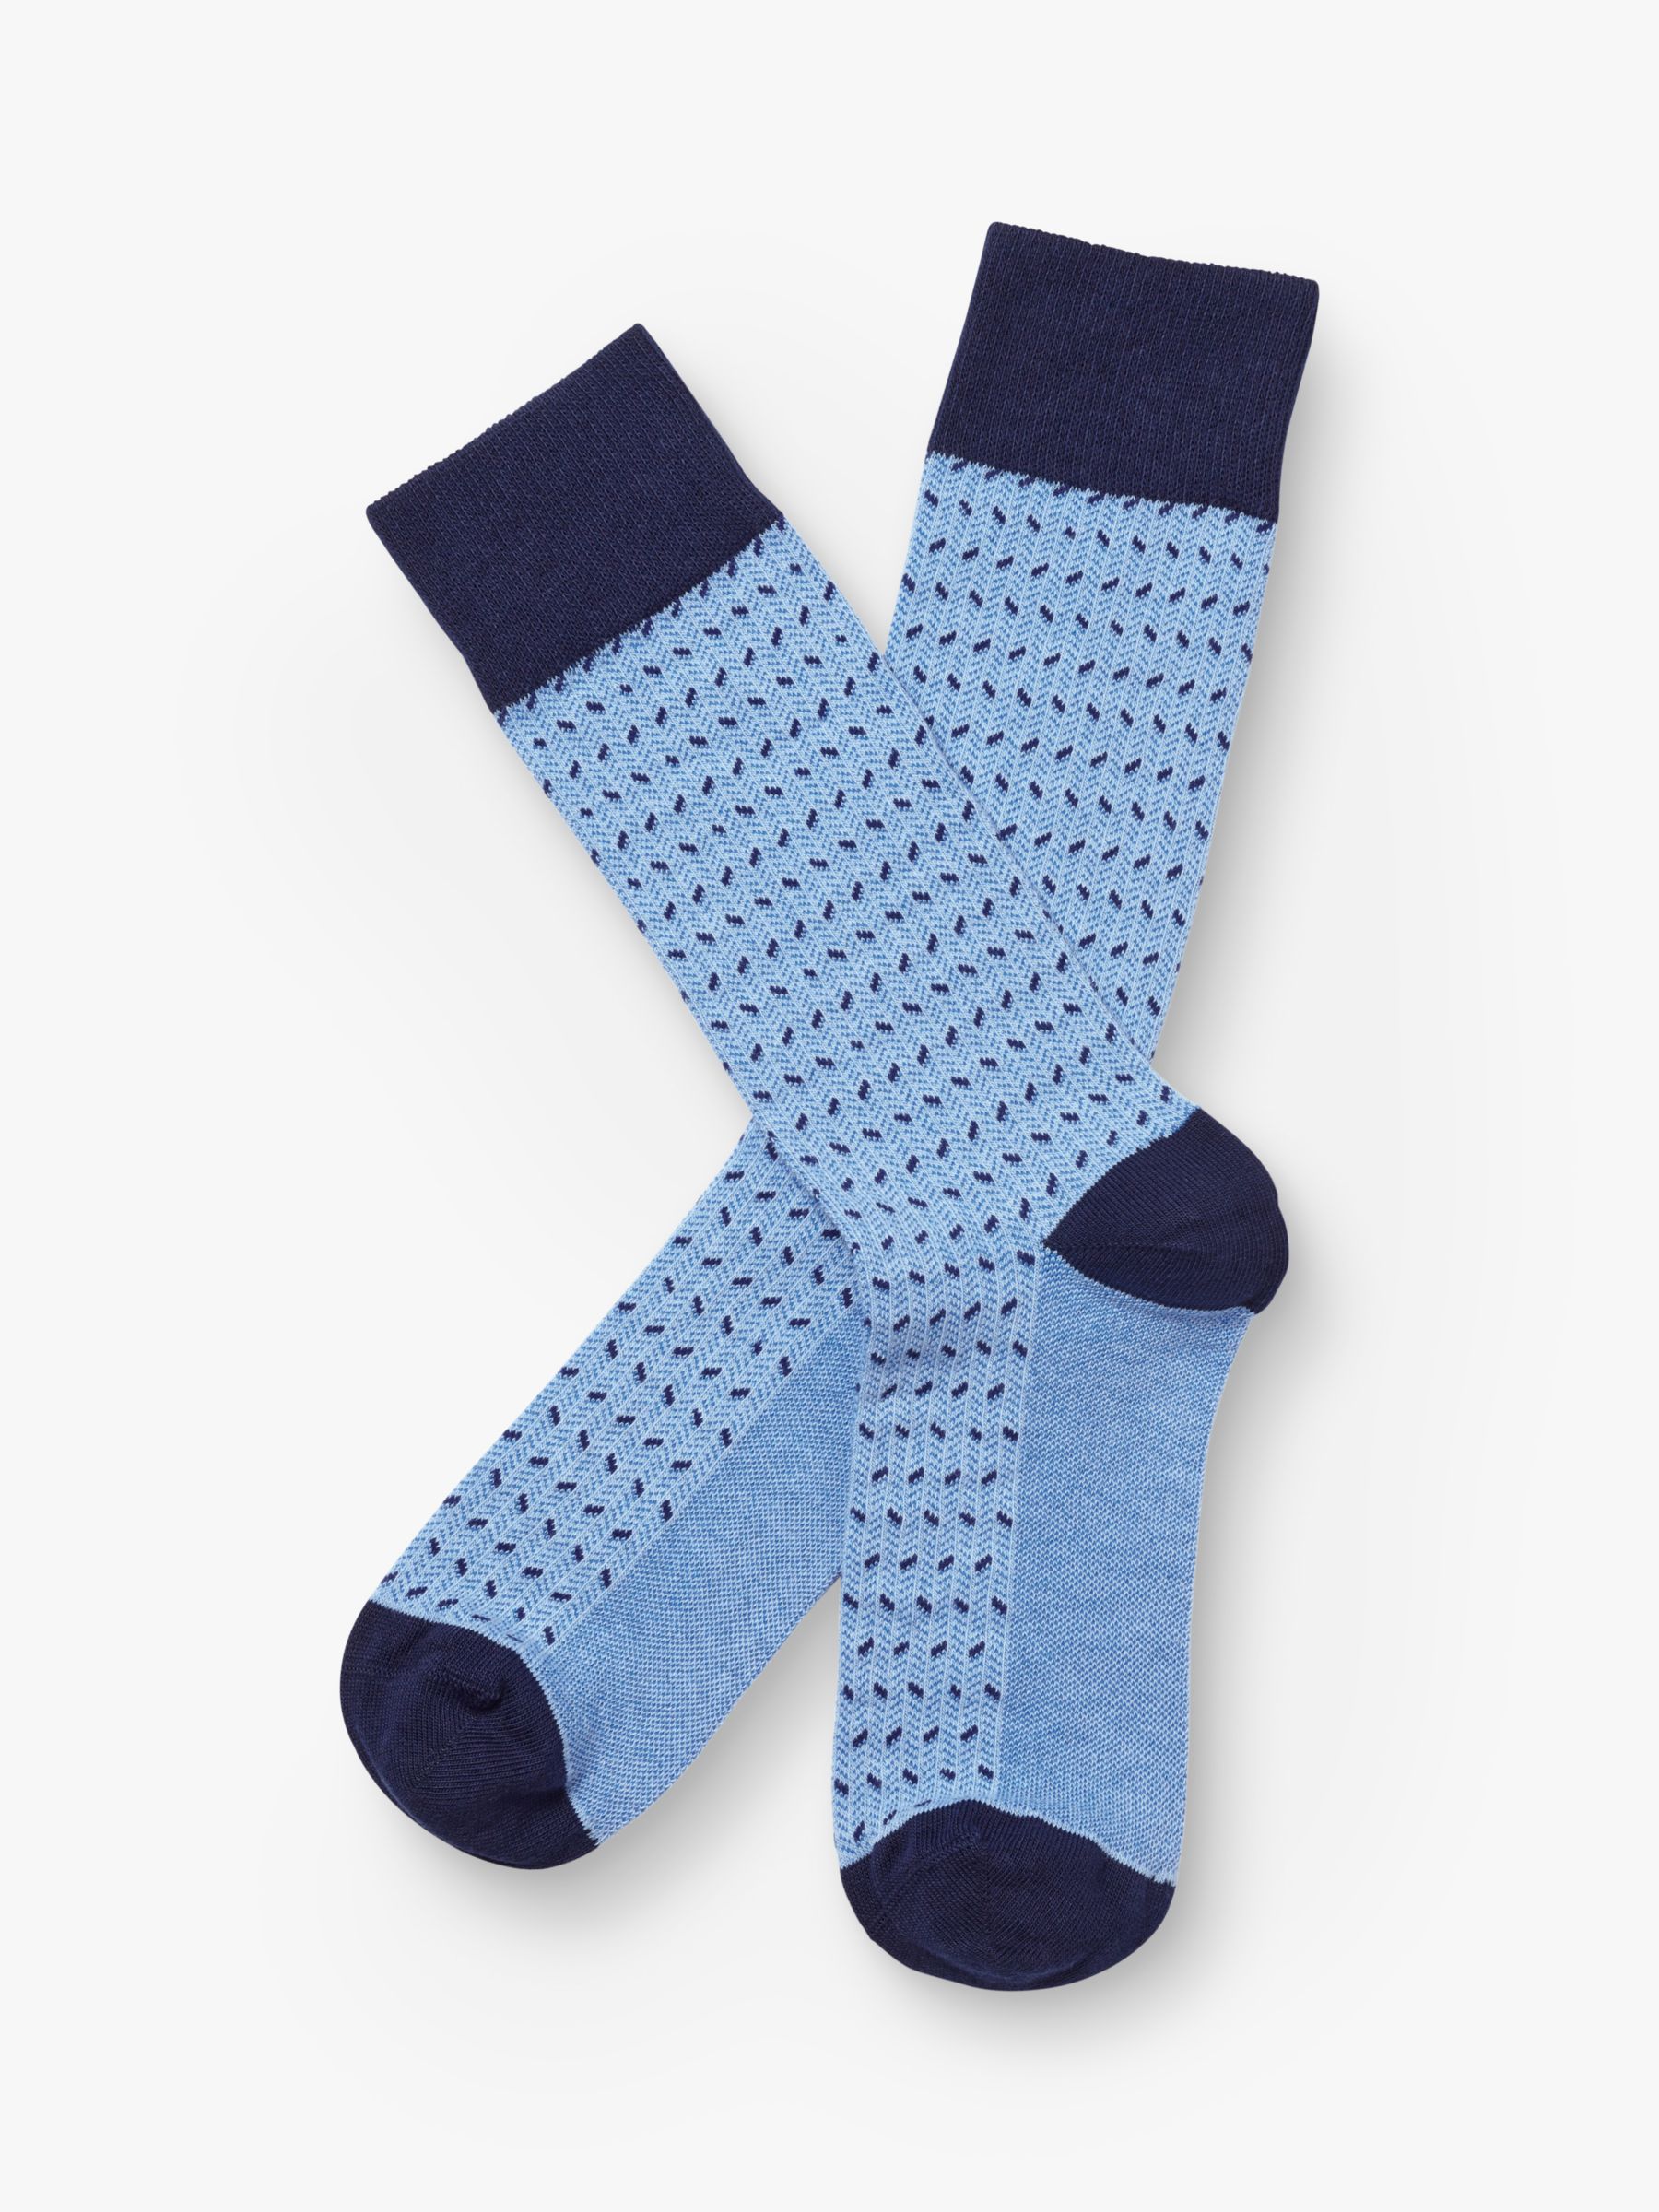 Носки с узором елочка Charles Tyrwhitt, василек синий носки fabian с узором елочка из смесового хлопка pantherella синий